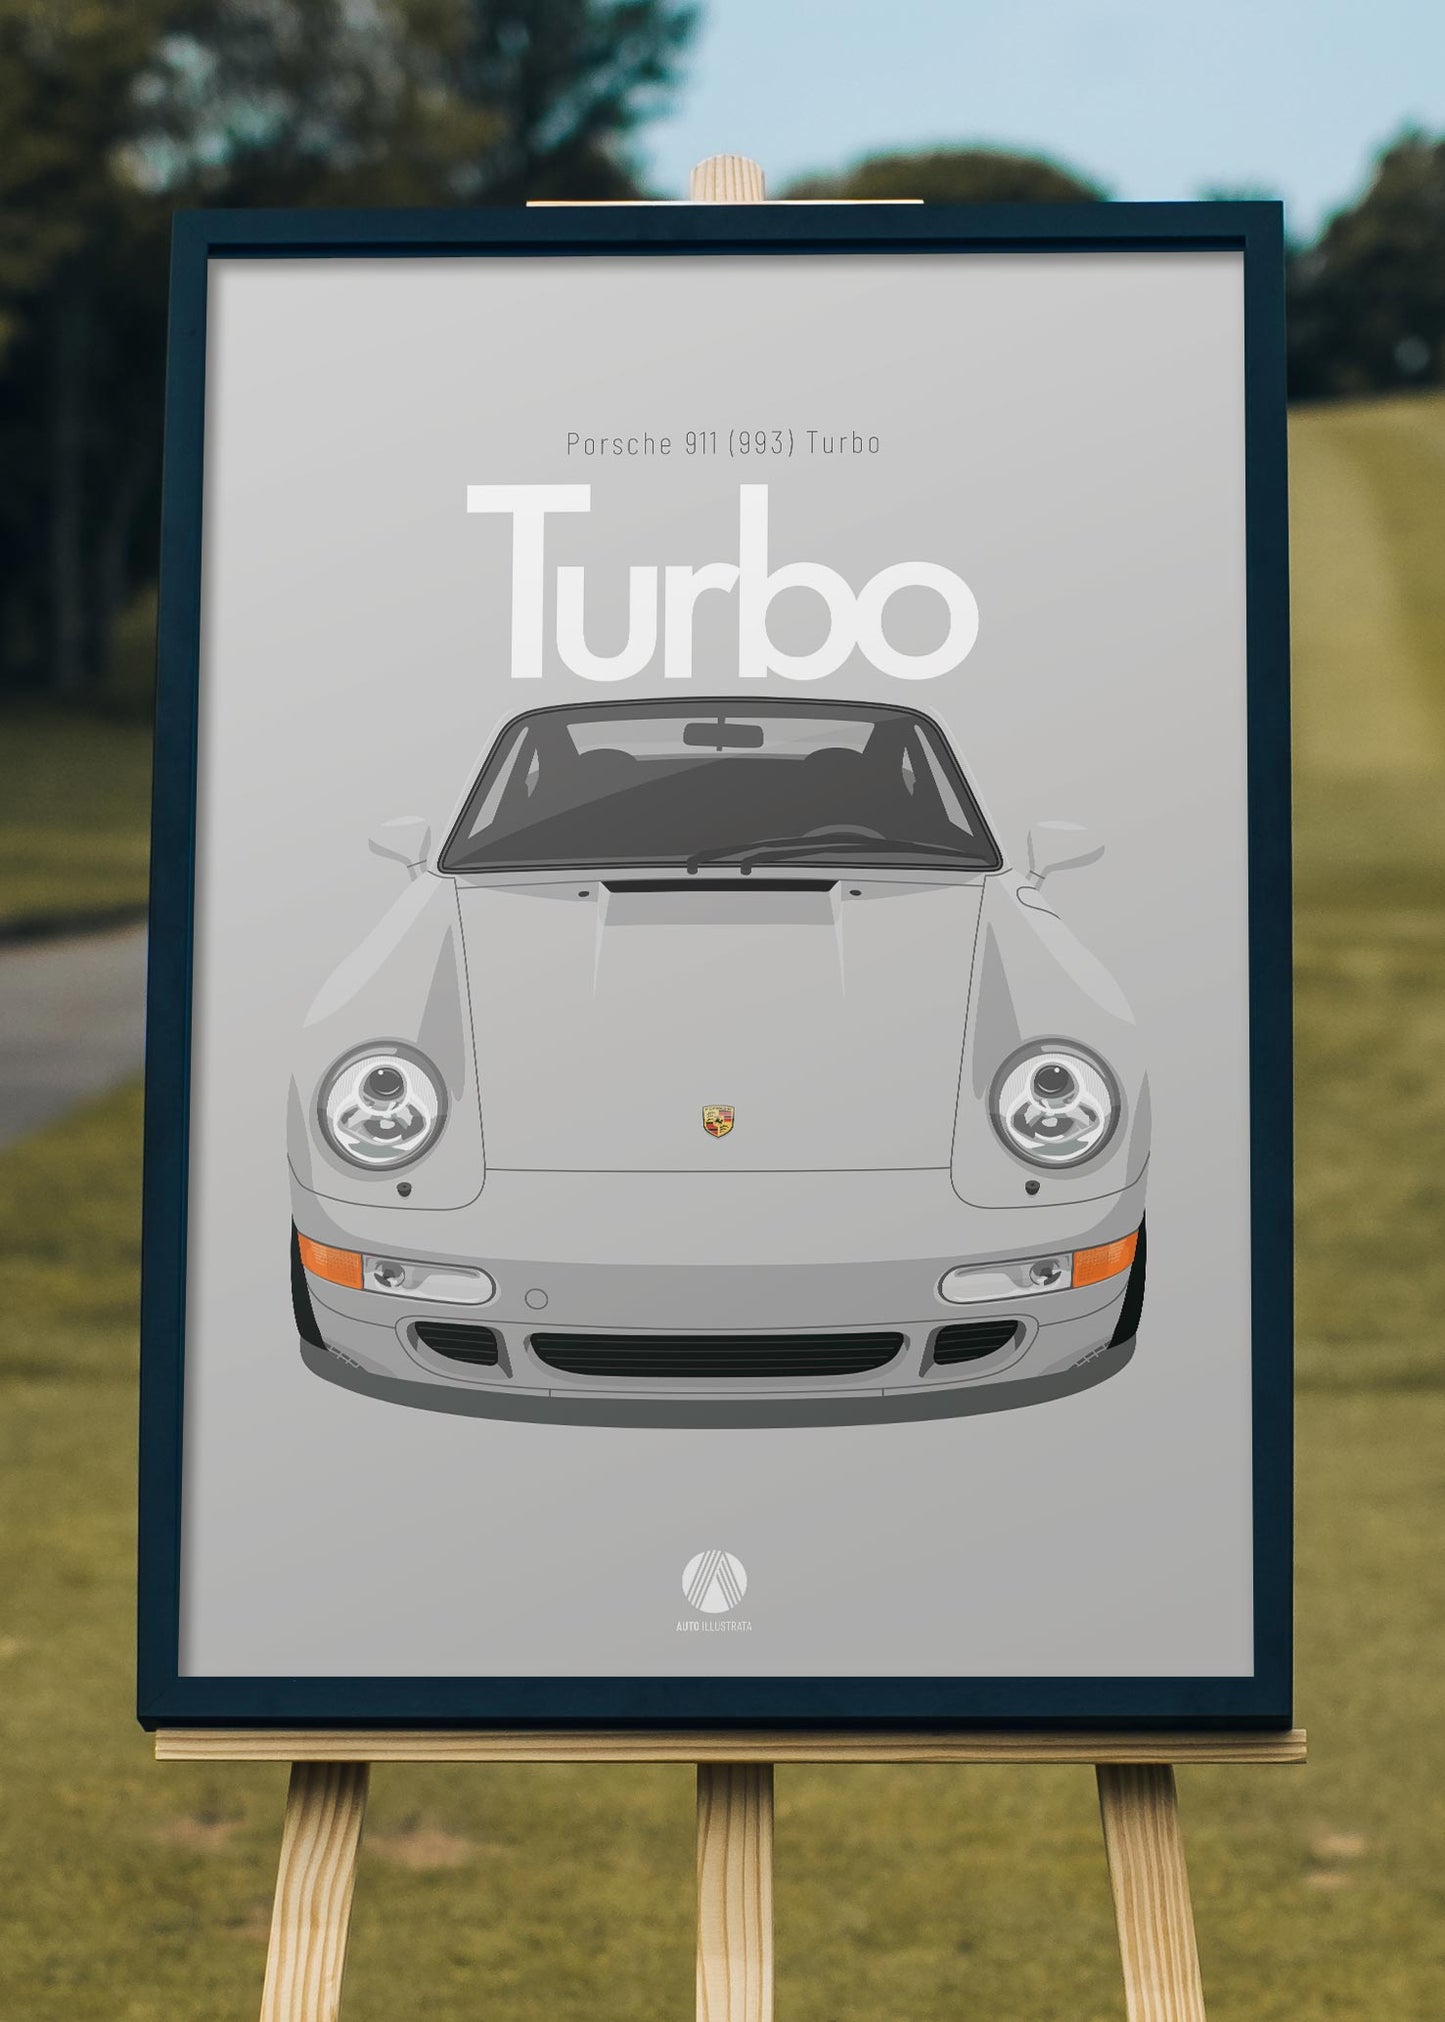 1996 Porsche 911 (993) Turbo Silver - poster print